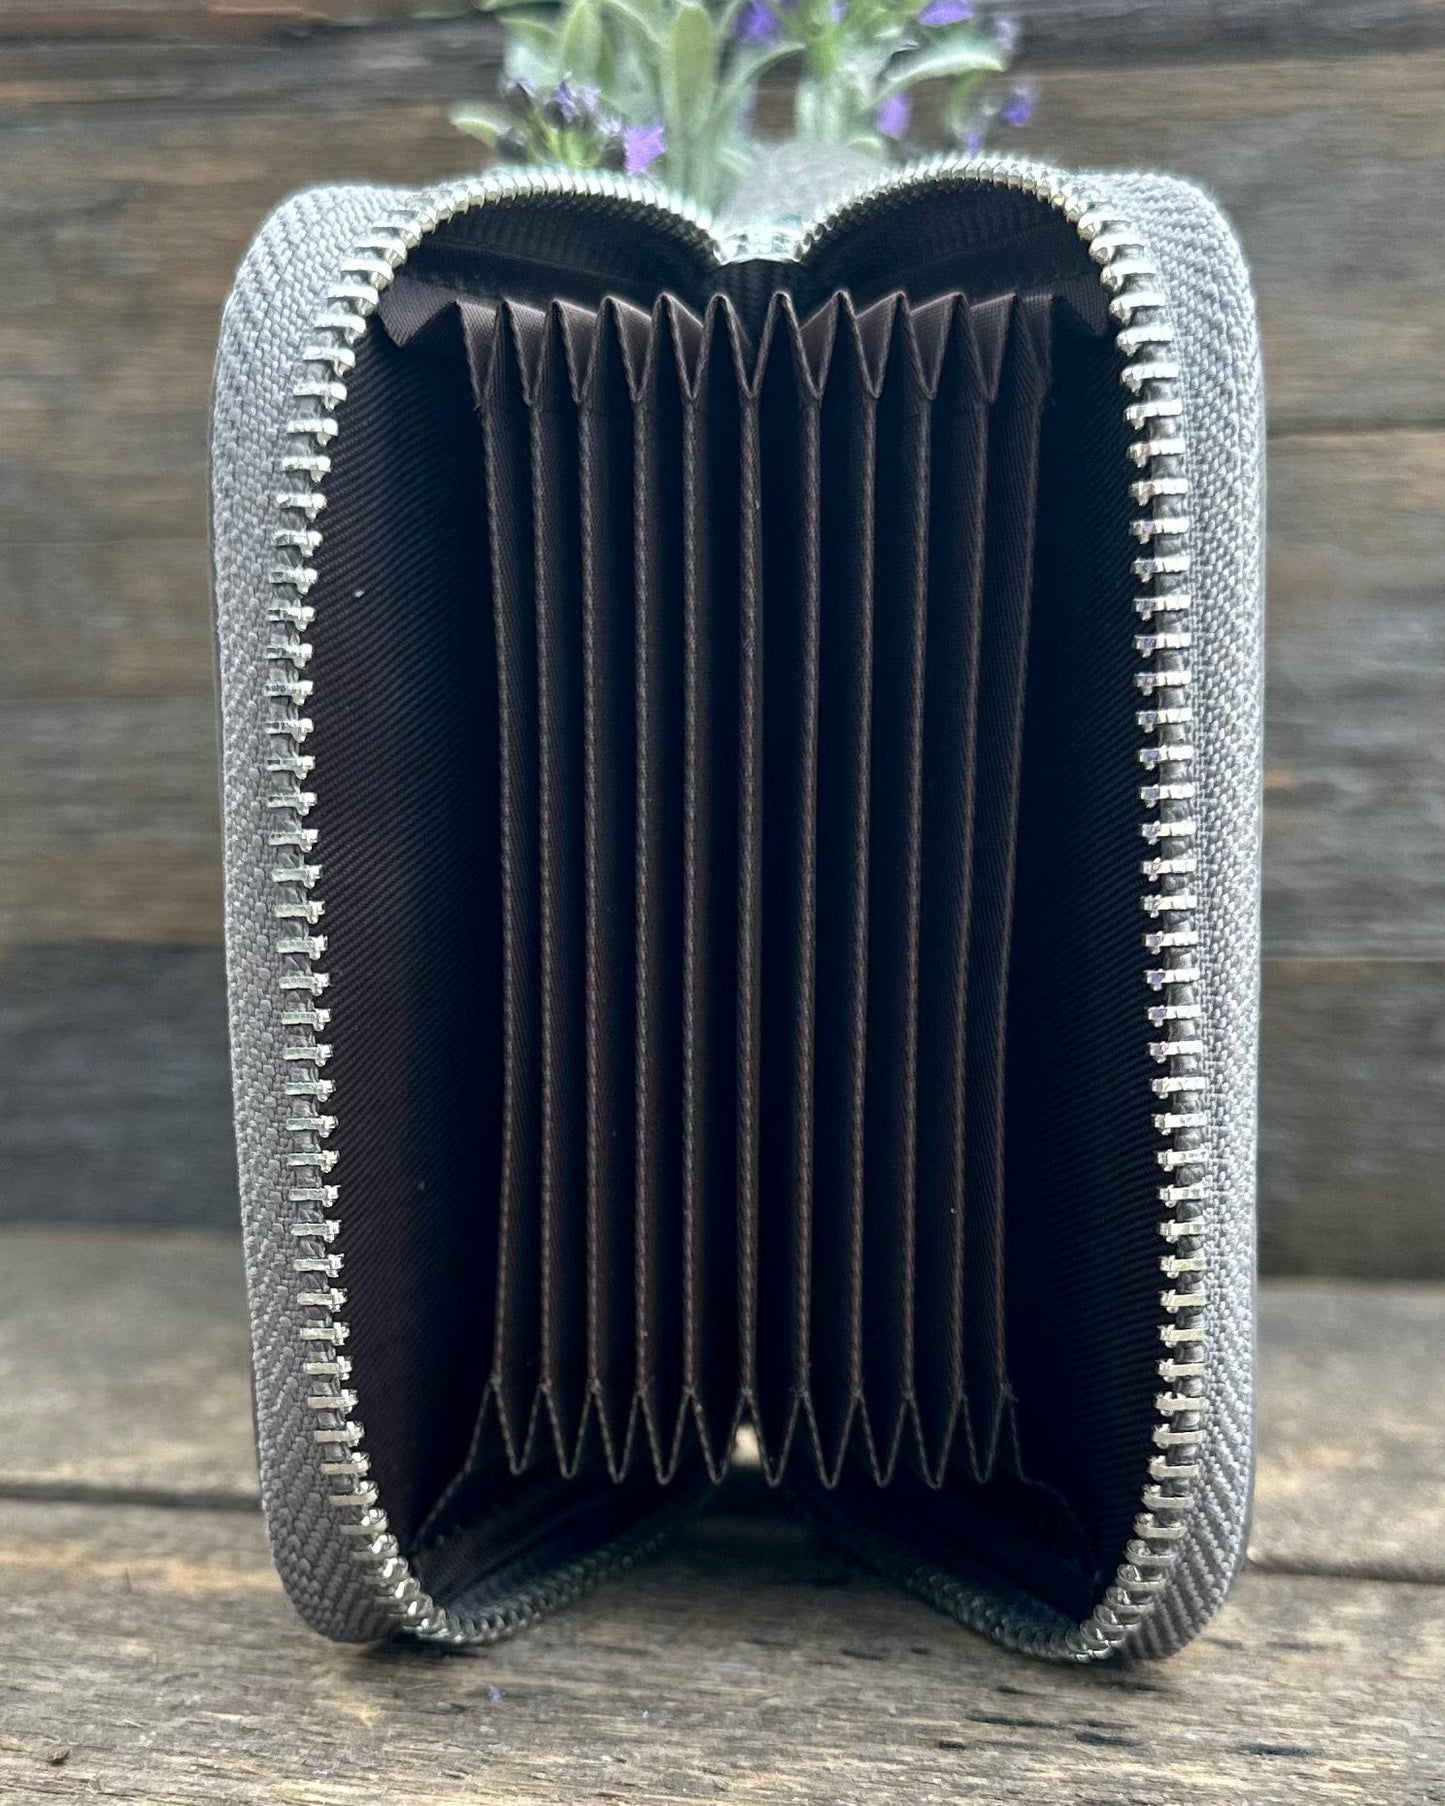 purses Leather Card Holder Purse - Grey